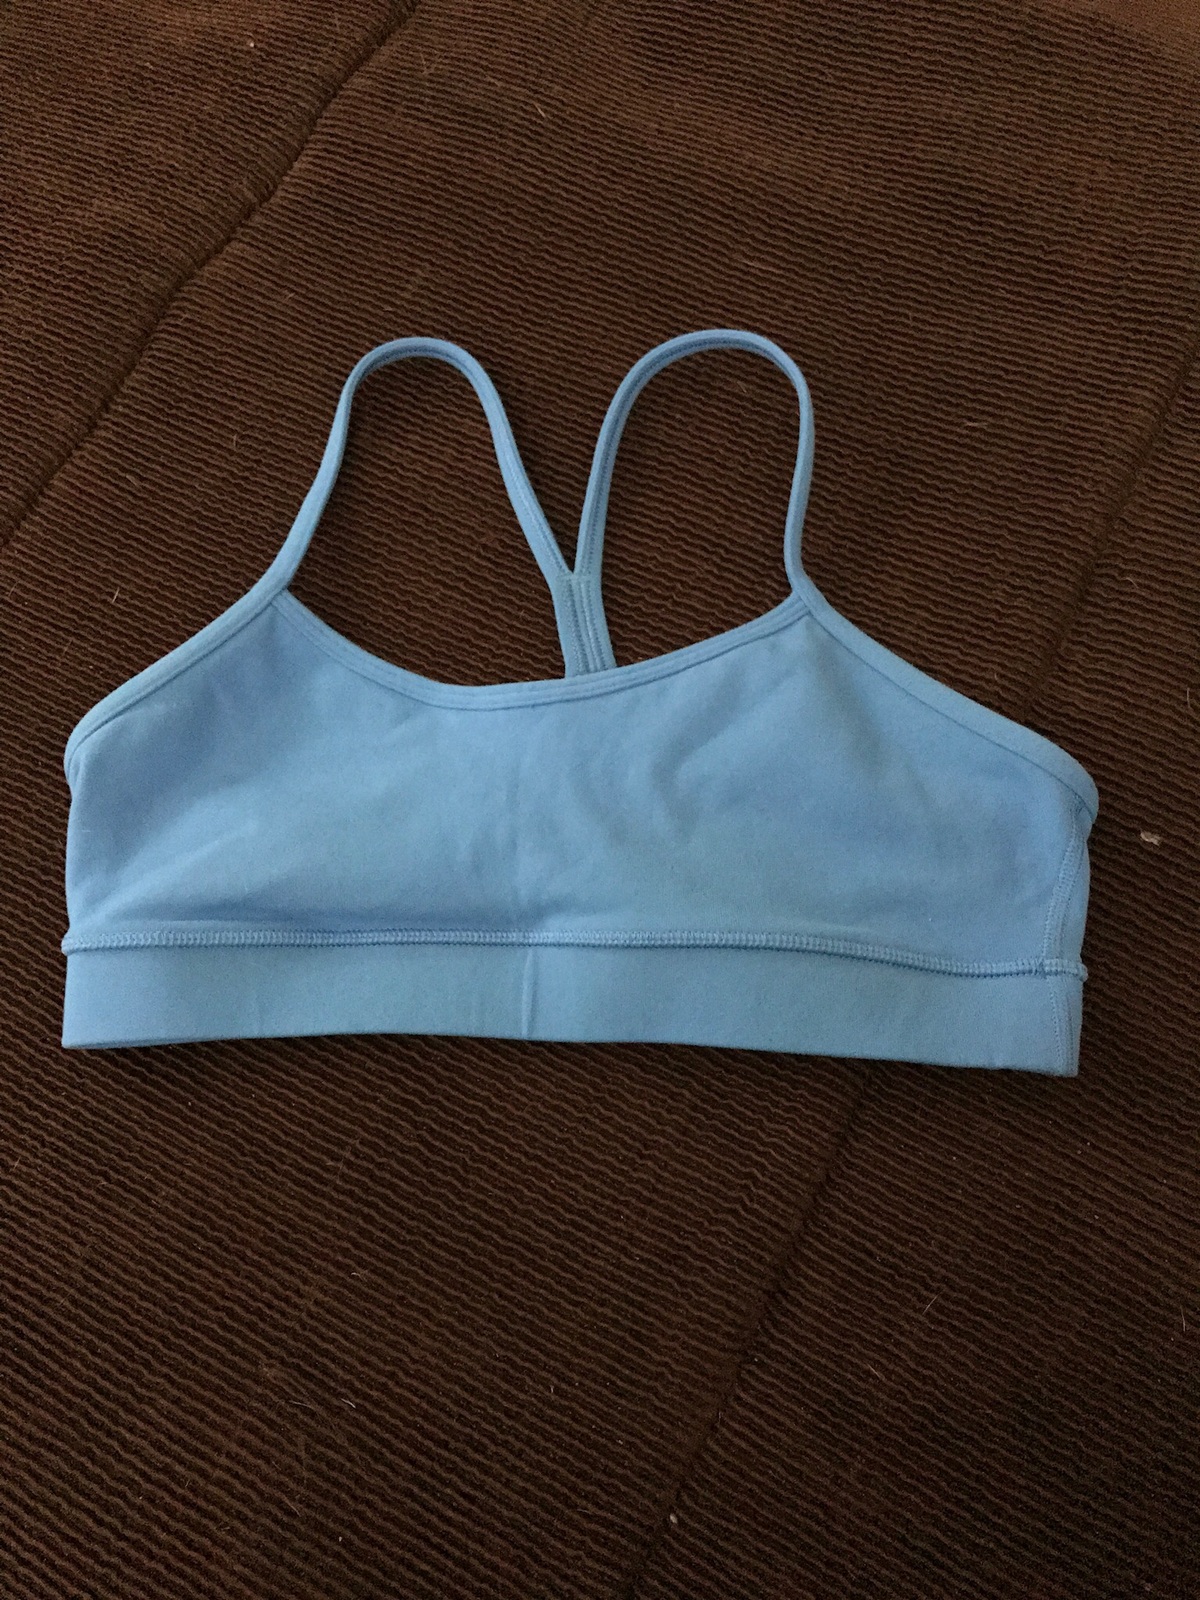 Lululemon women's sports bra size small - Sports Bras